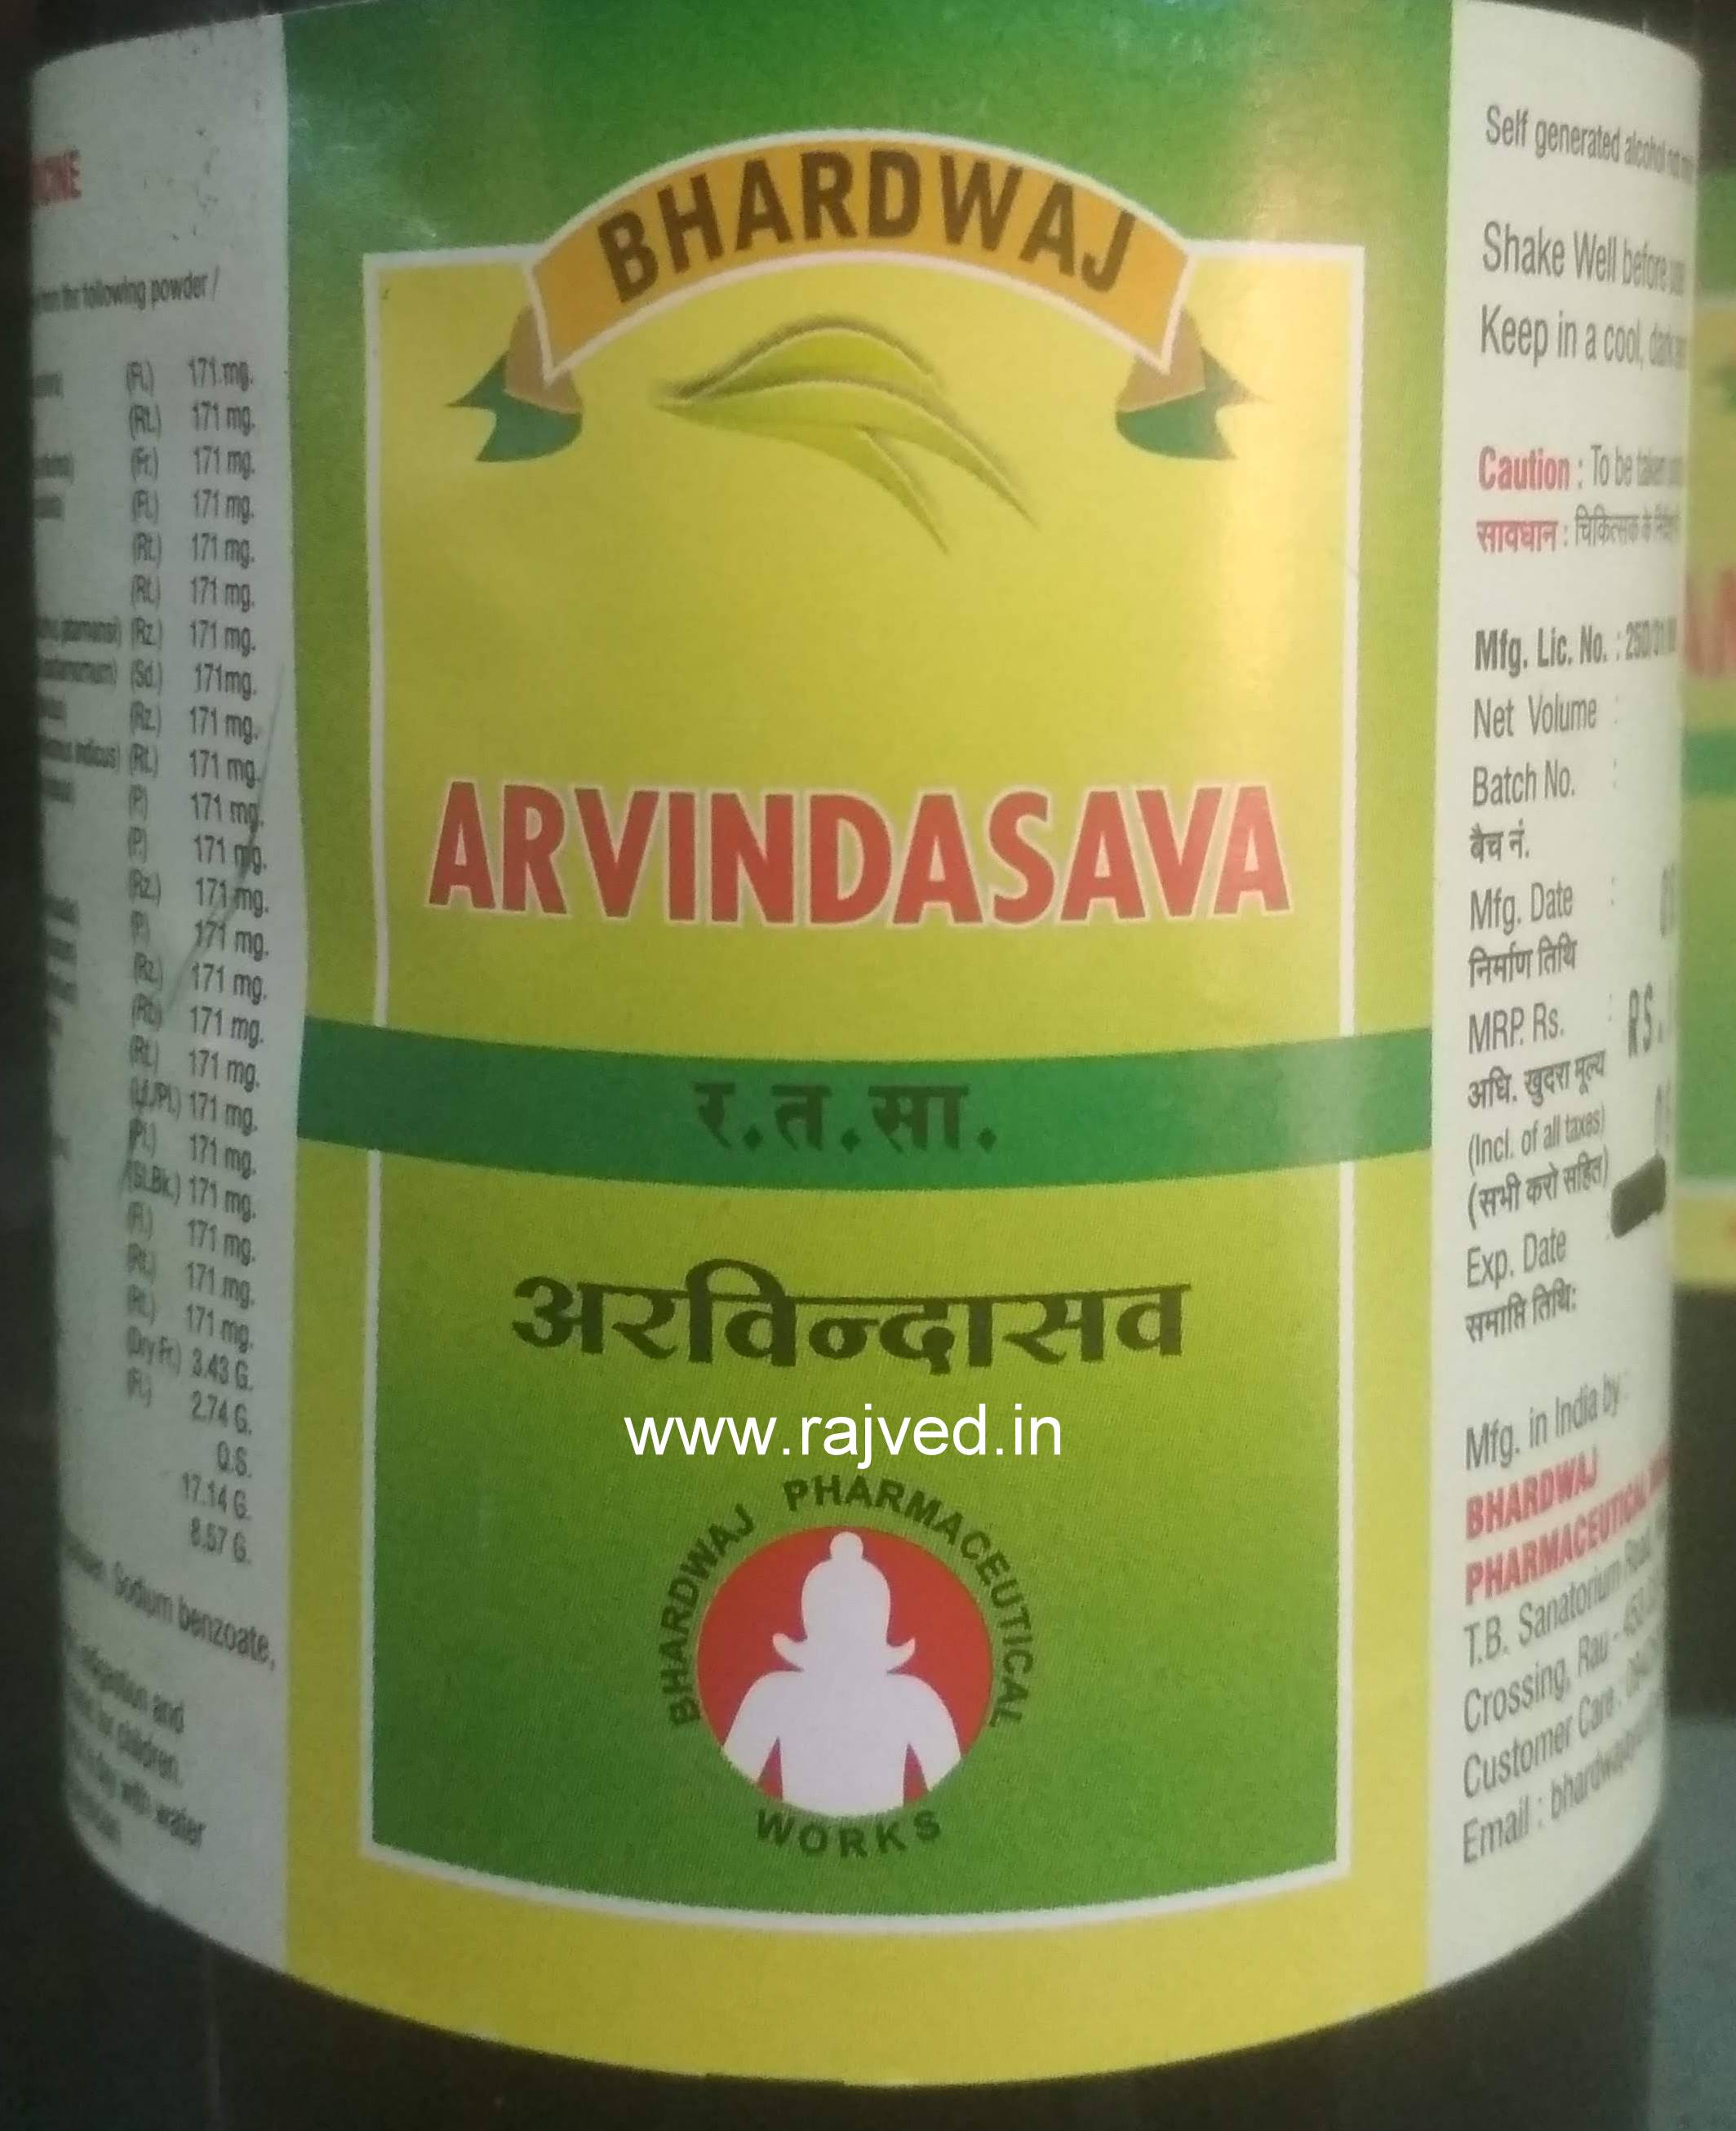 arvindasava 1lit Bharadwaj Pharmaceuticals Indore